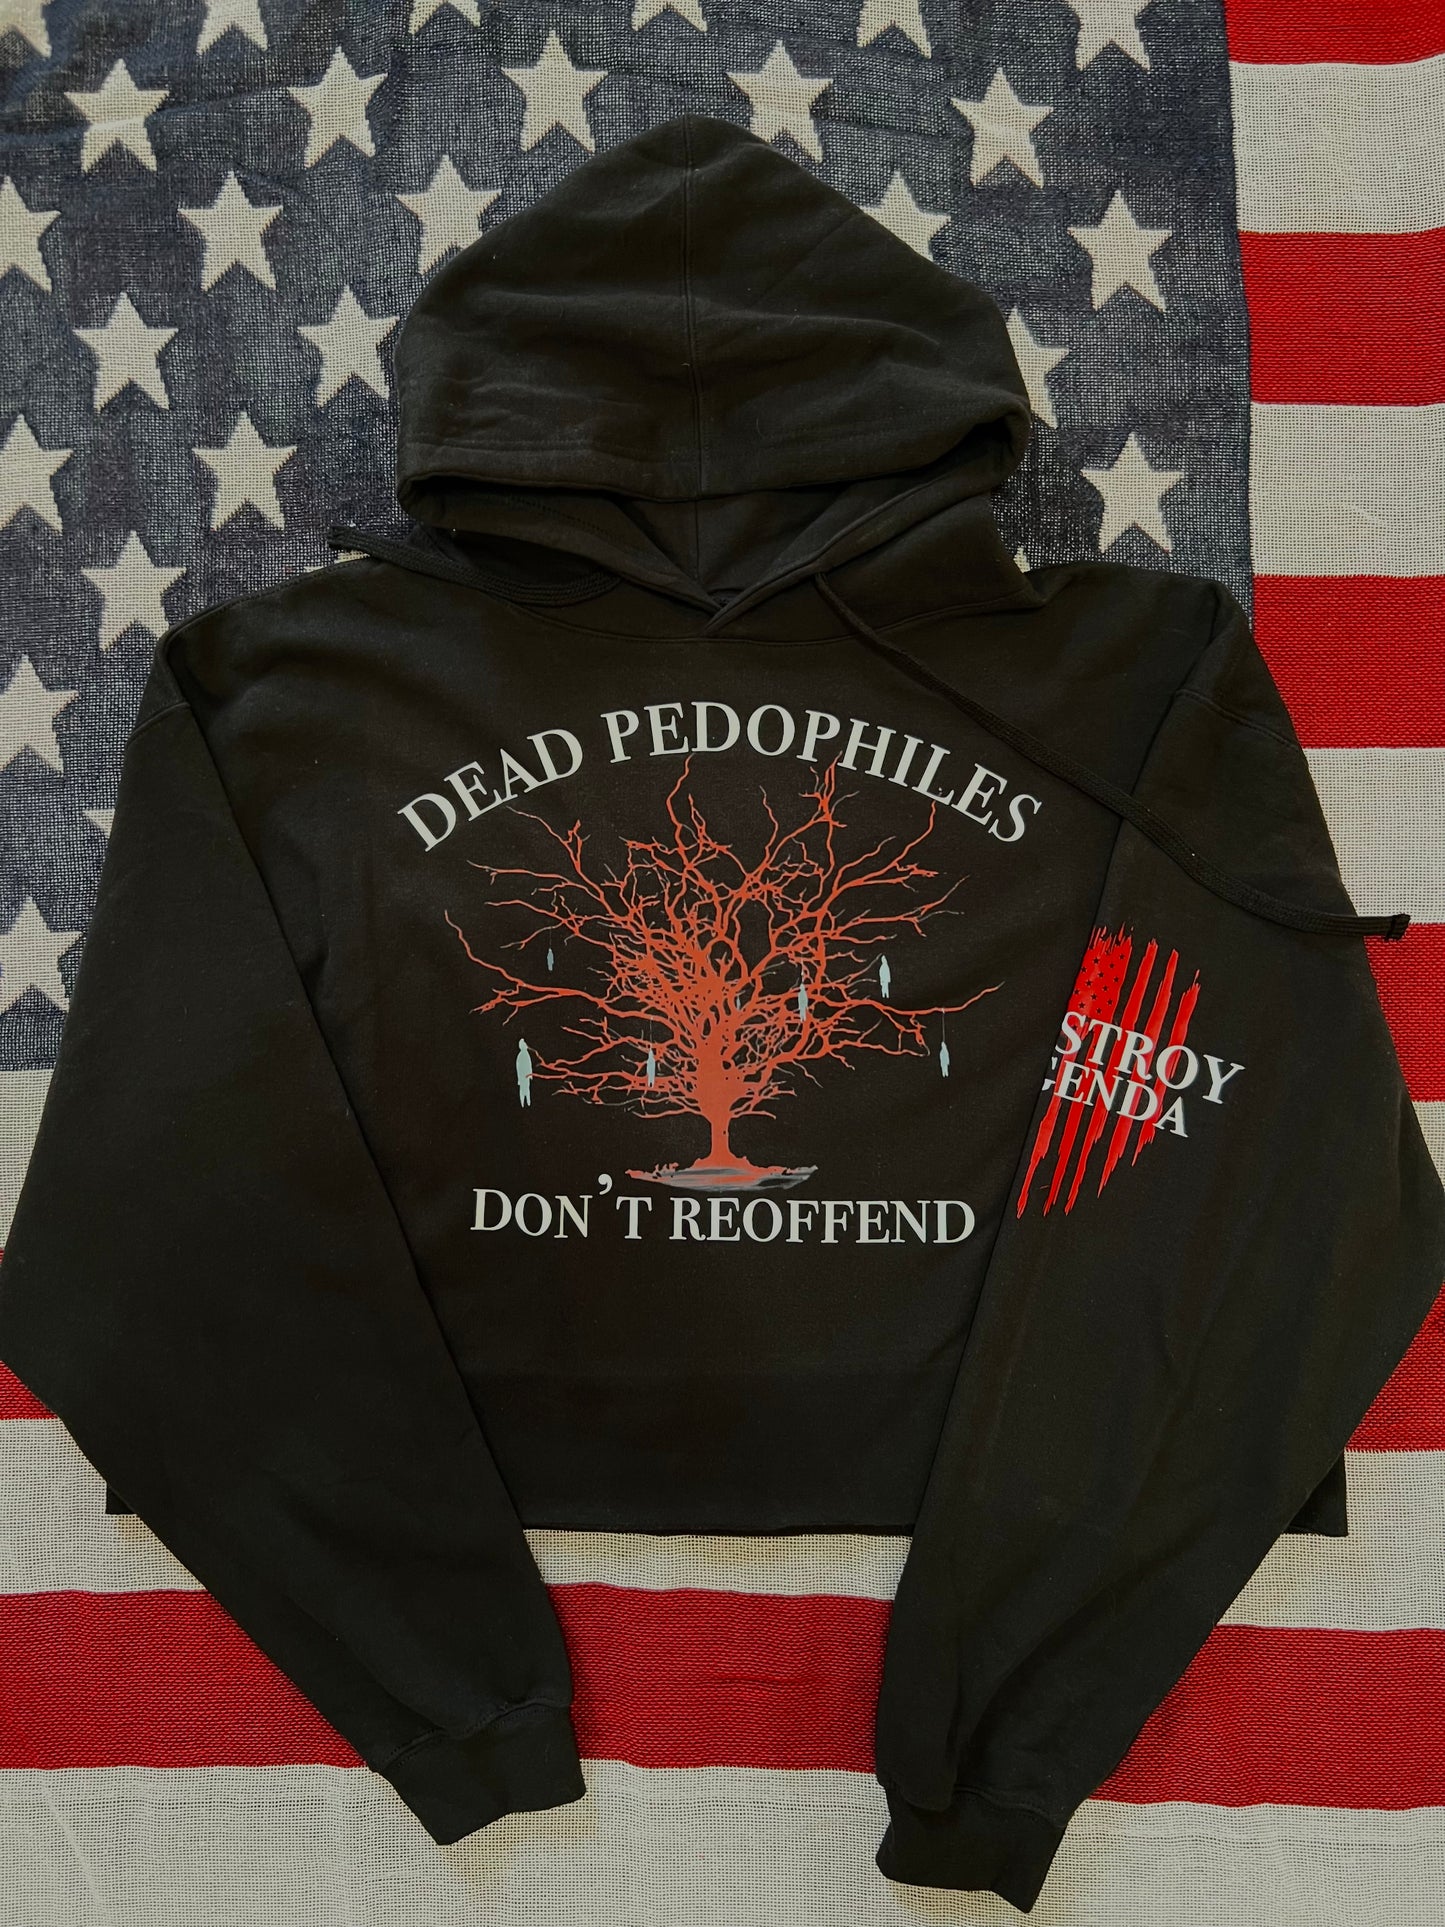 Dead Pedophiles Don't Reoffend